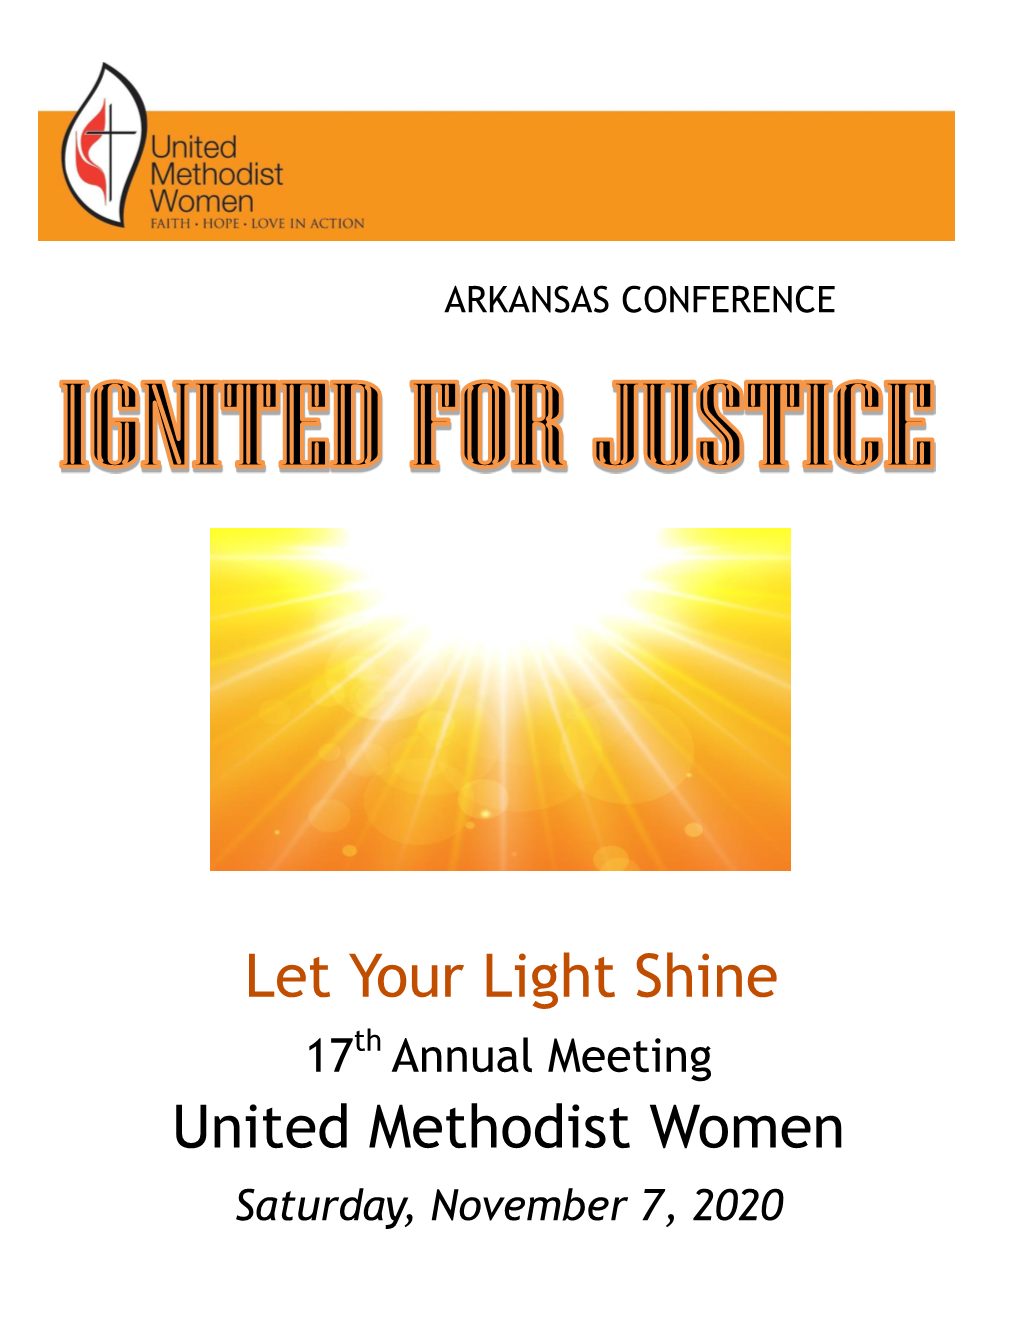 Let Your Light Shine United Methodist Women